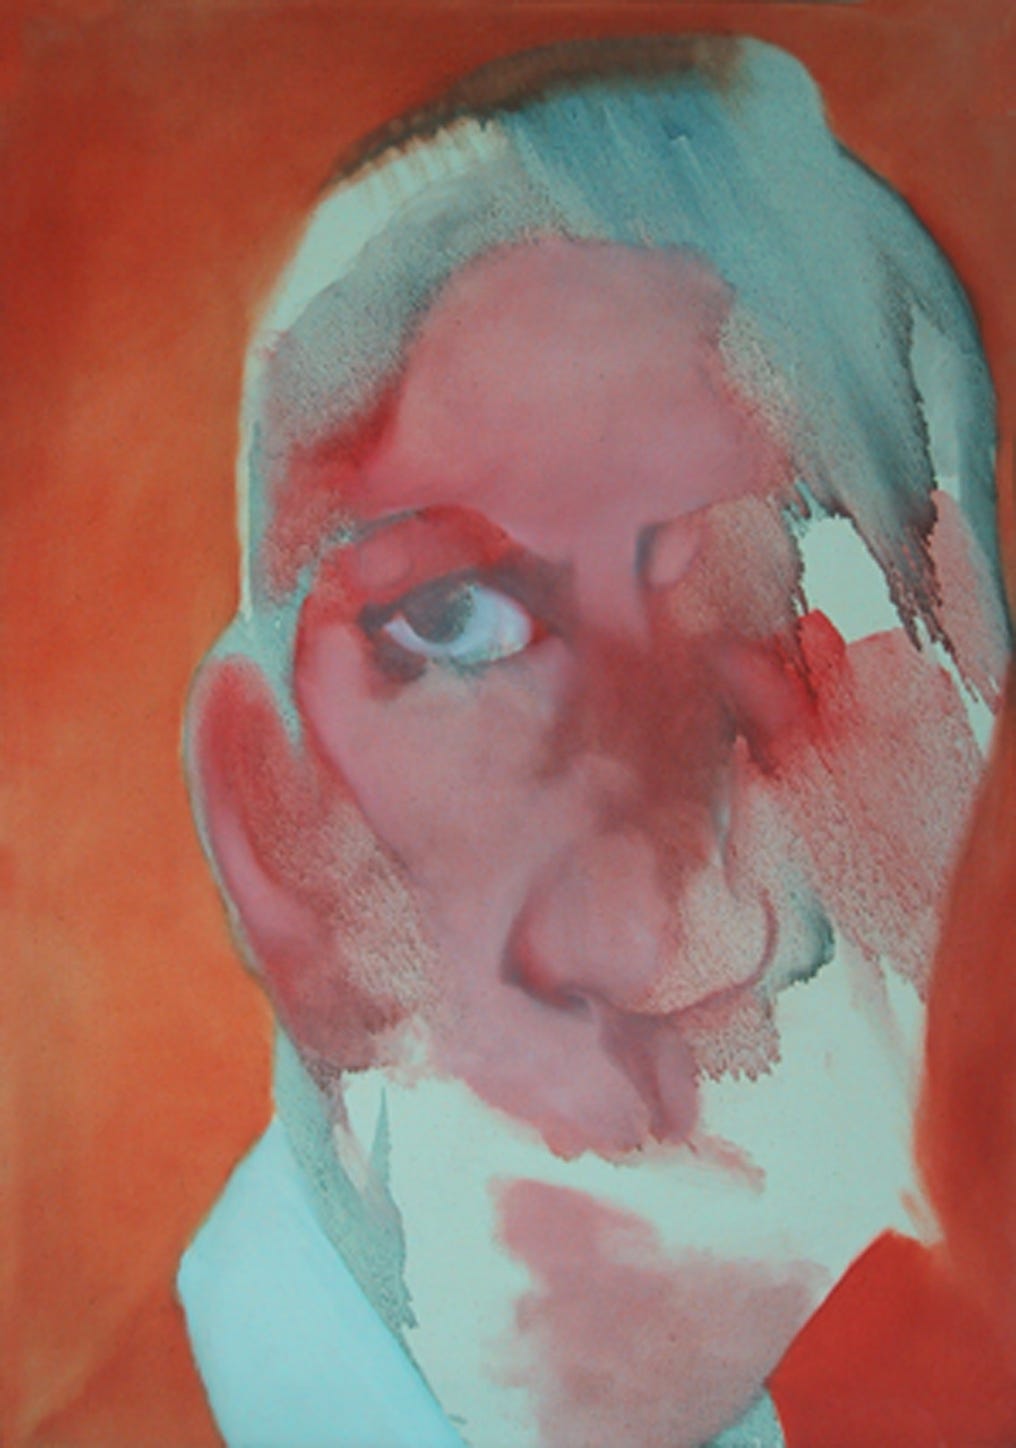 76x53 cm, oil on canvas, 2004